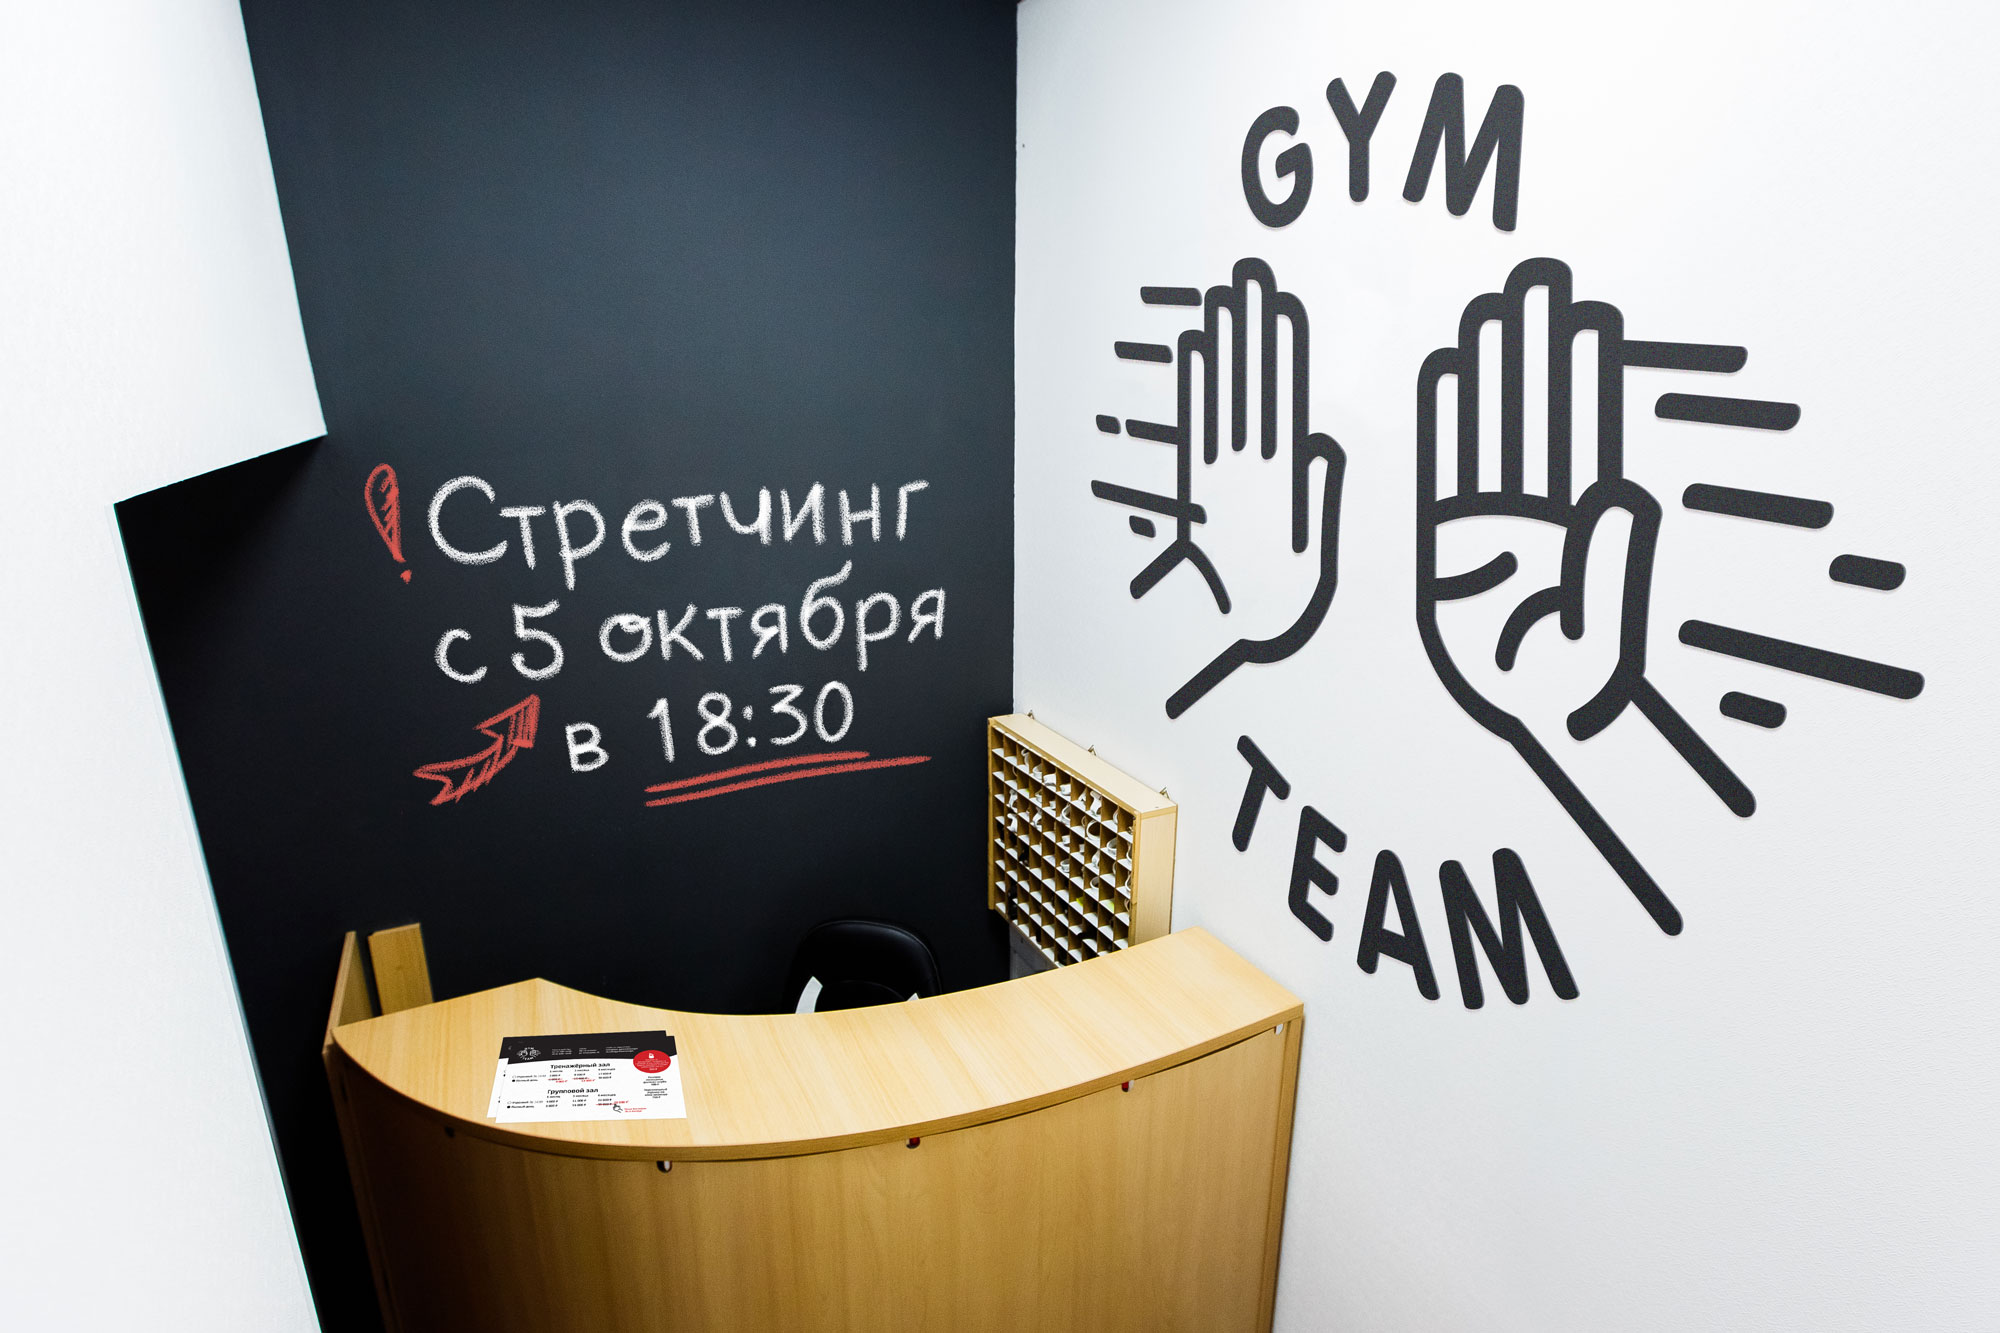 GYM TEAM健身俱乐部标识设计 © zernaev